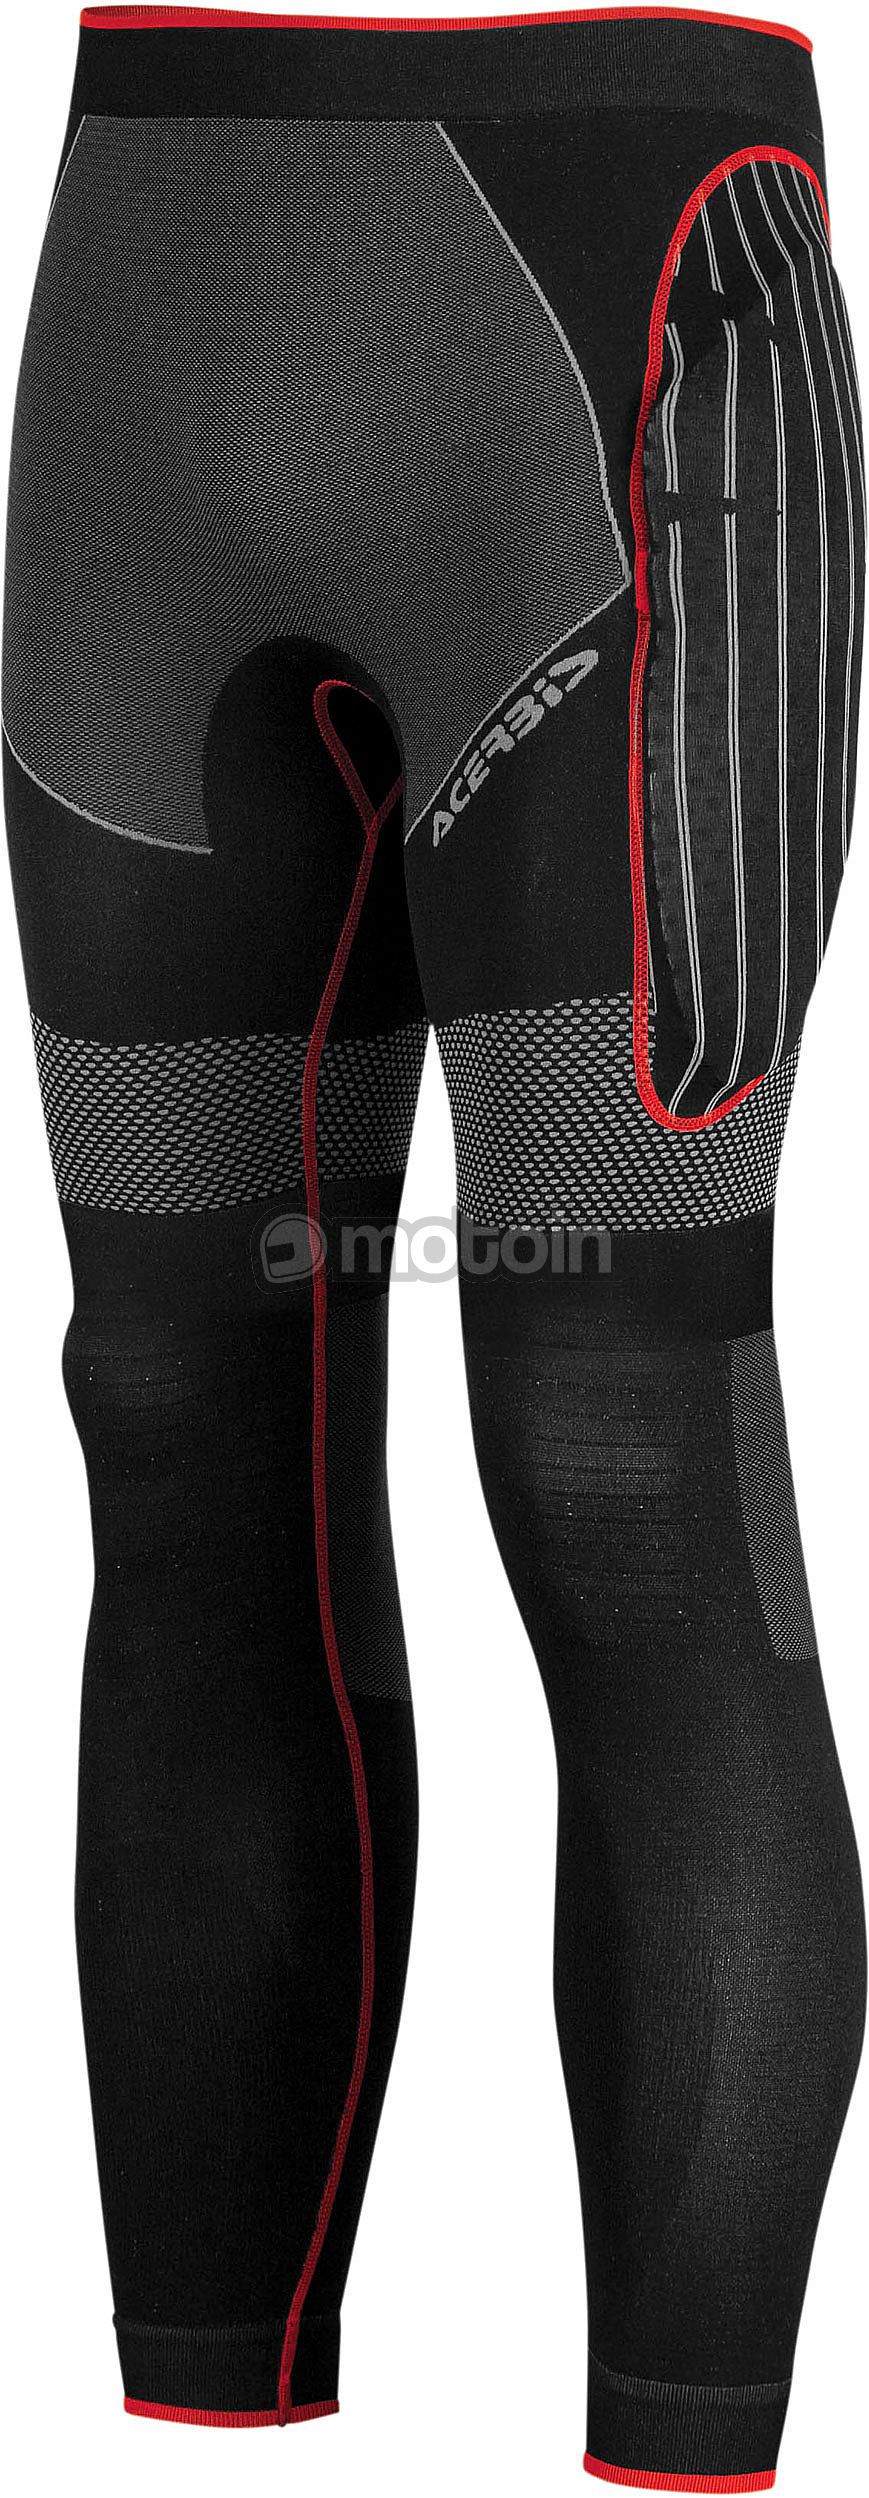 Acerbis X-Fit S16, protector pants long